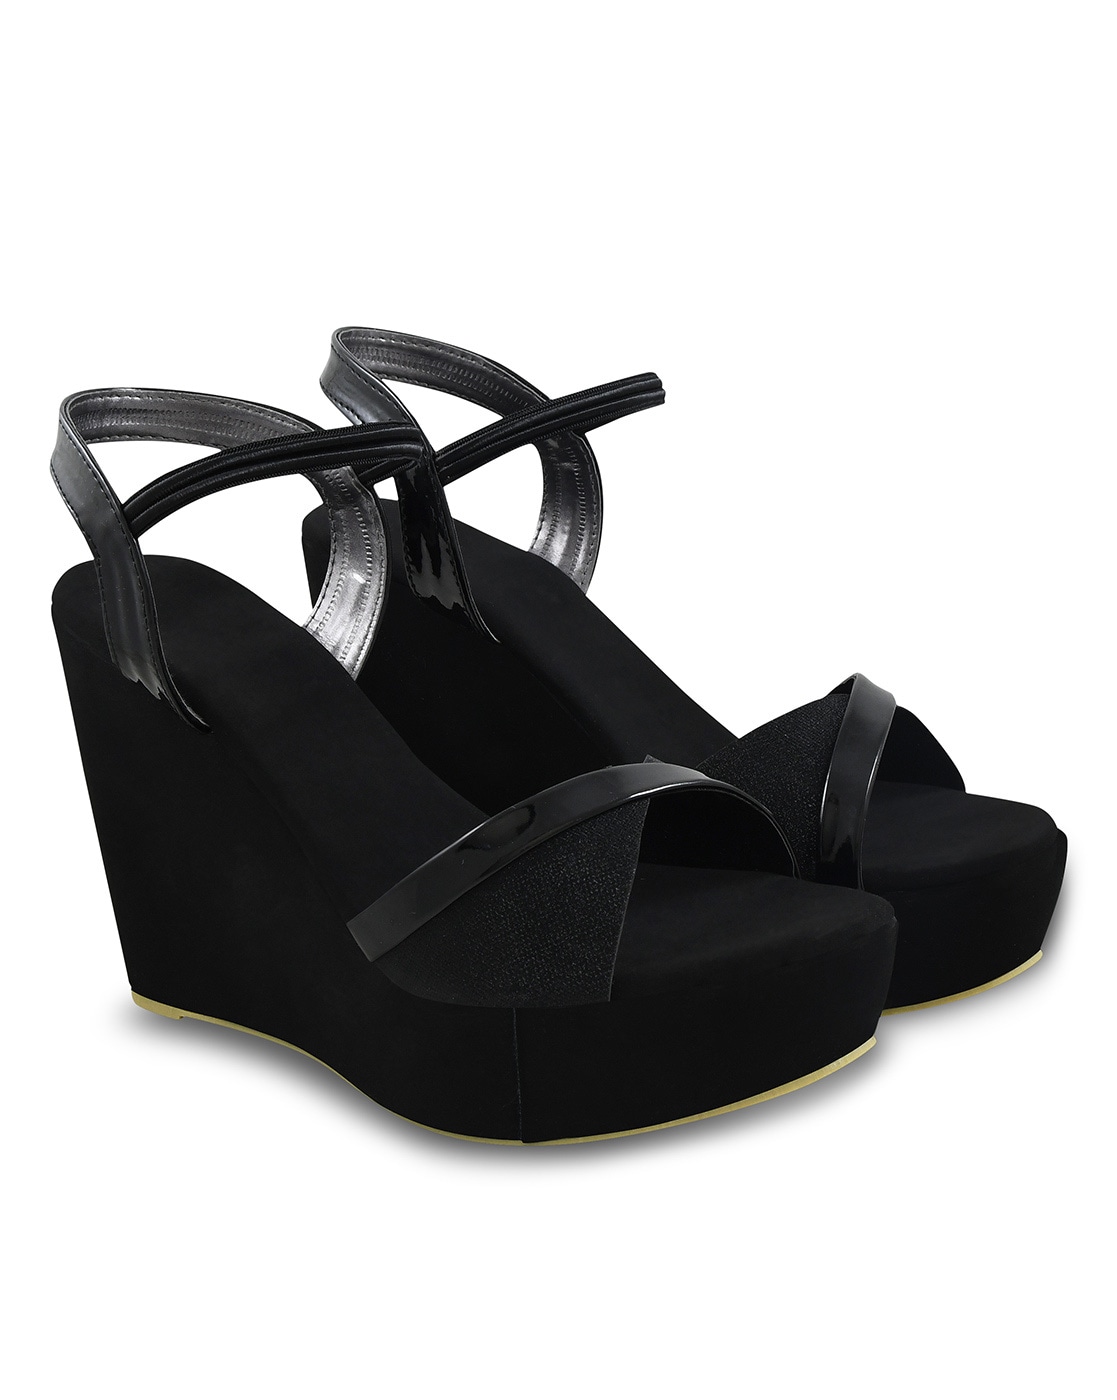 Black Wedge Heels Sandals